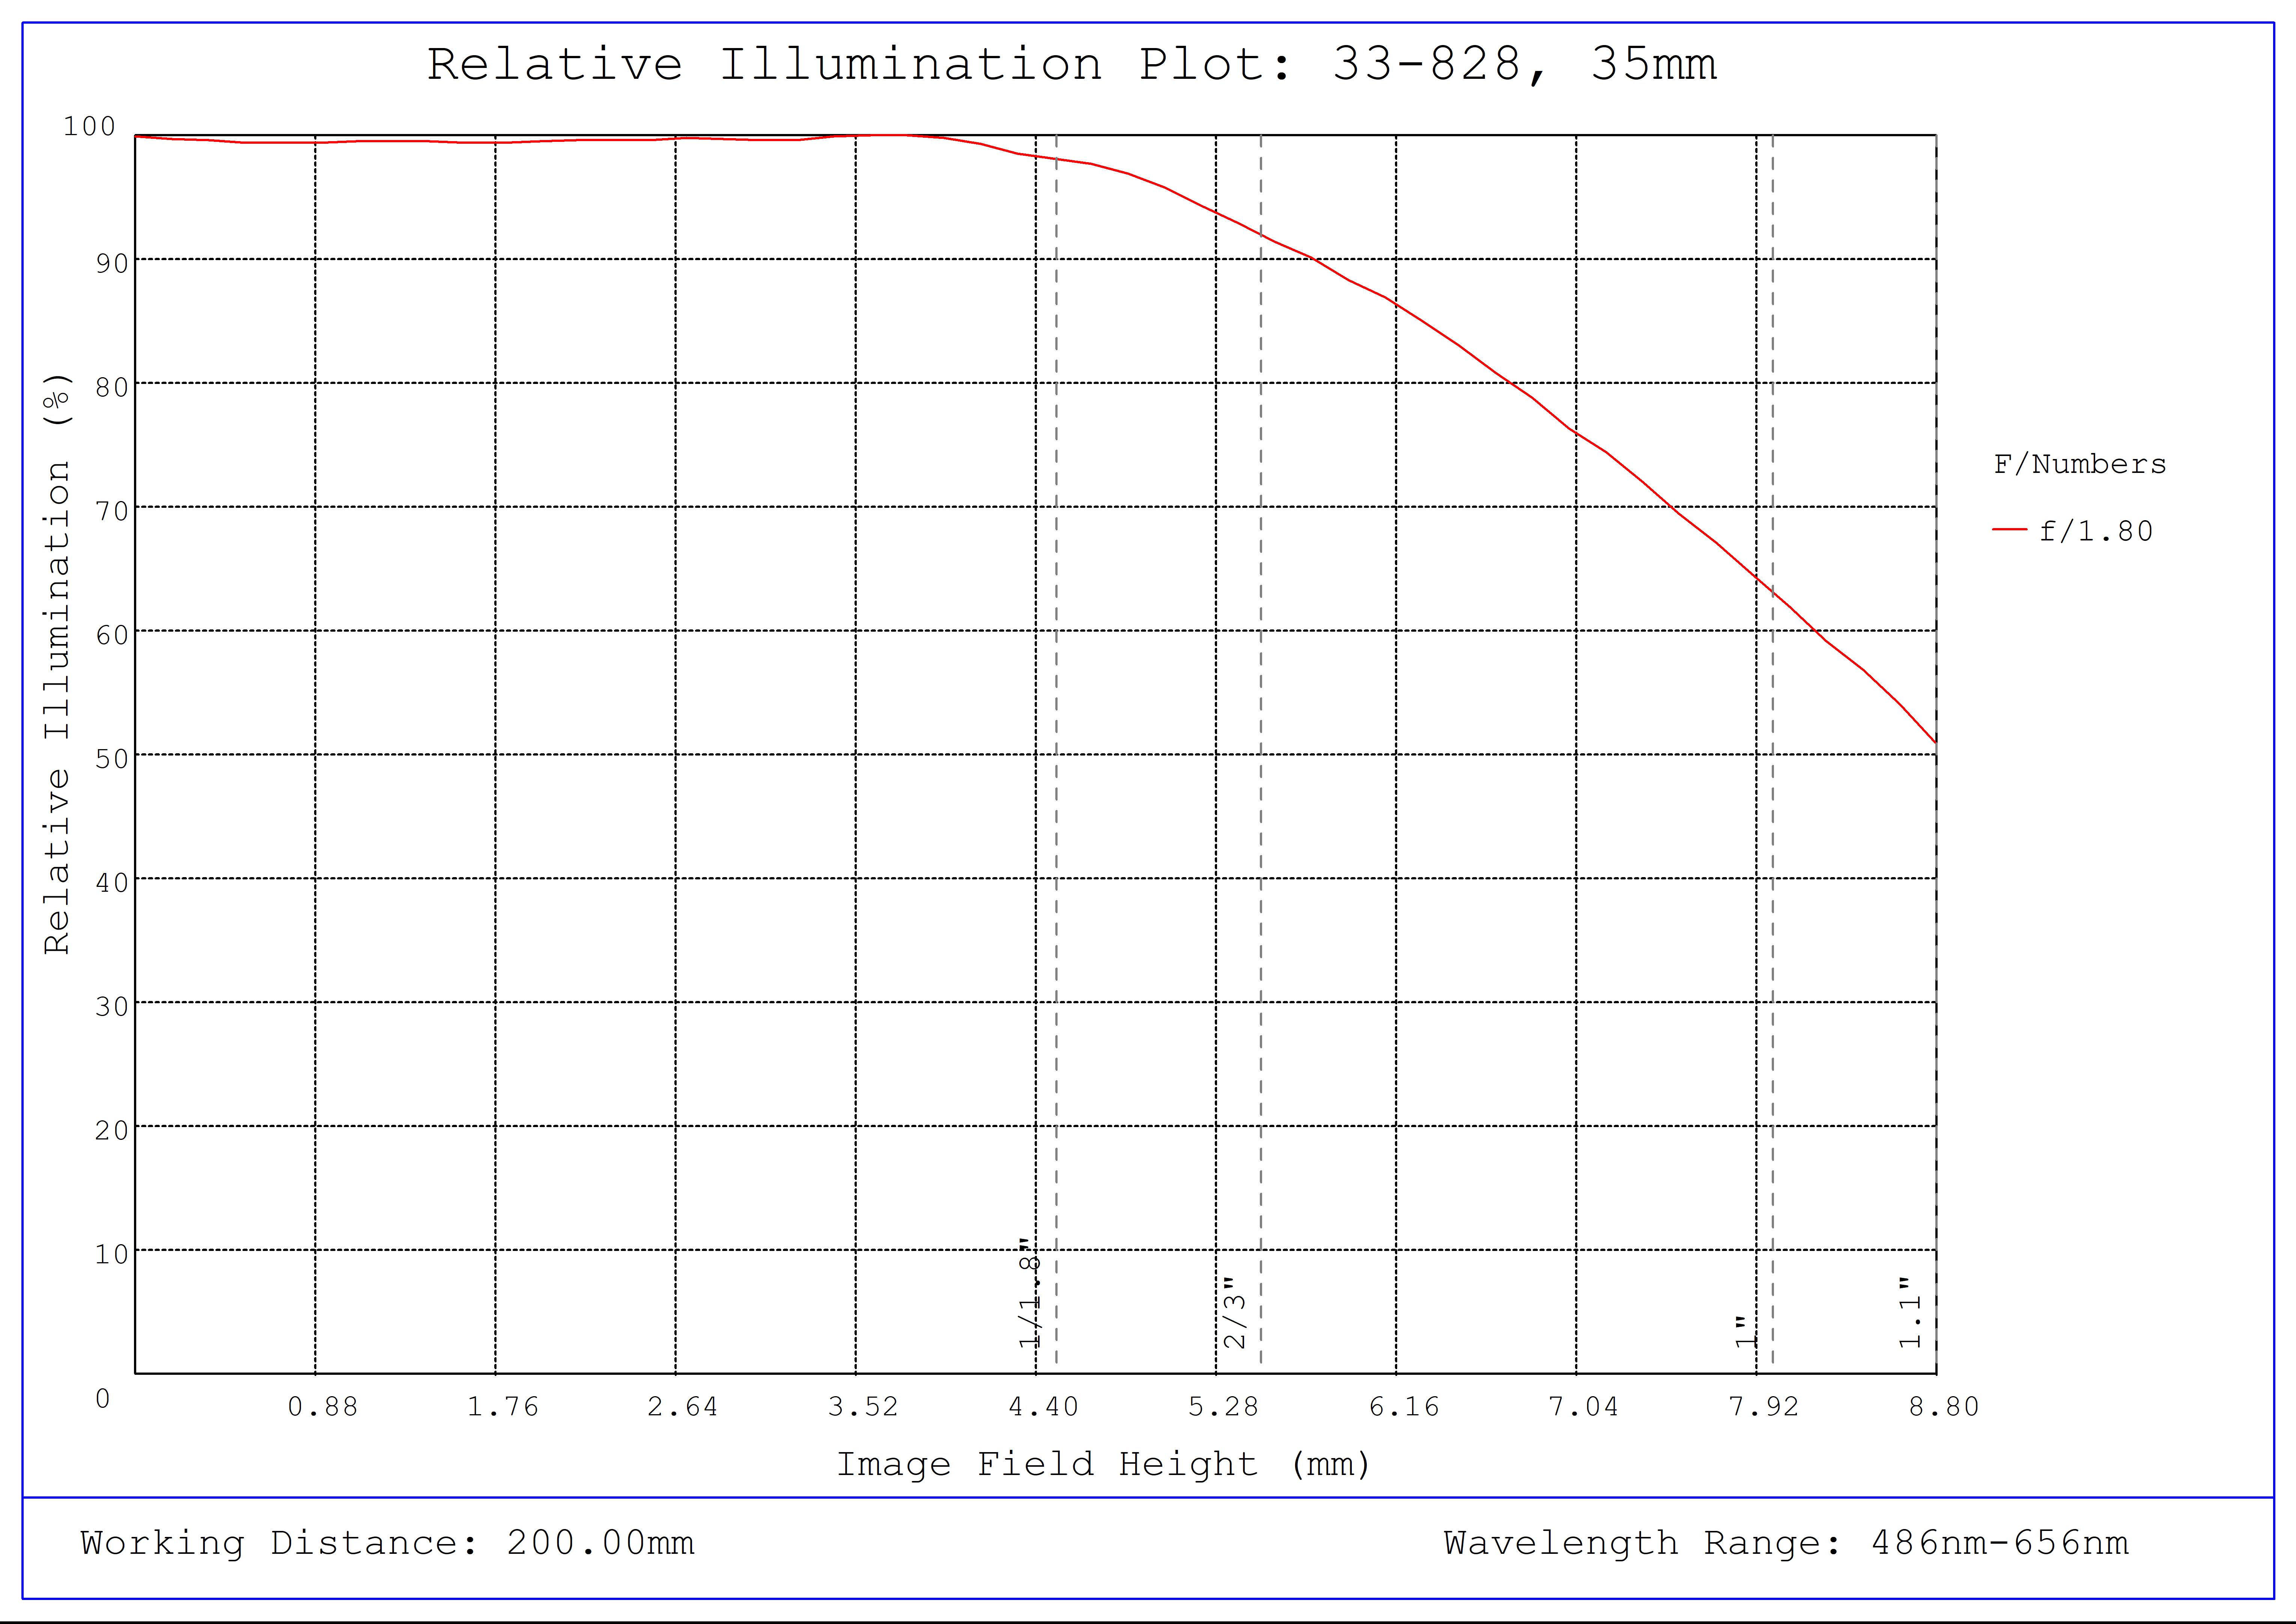 #33-828, 35mm f/1.8, HPi Series Fixed Focal Length Lens, Relative Illumination Plot